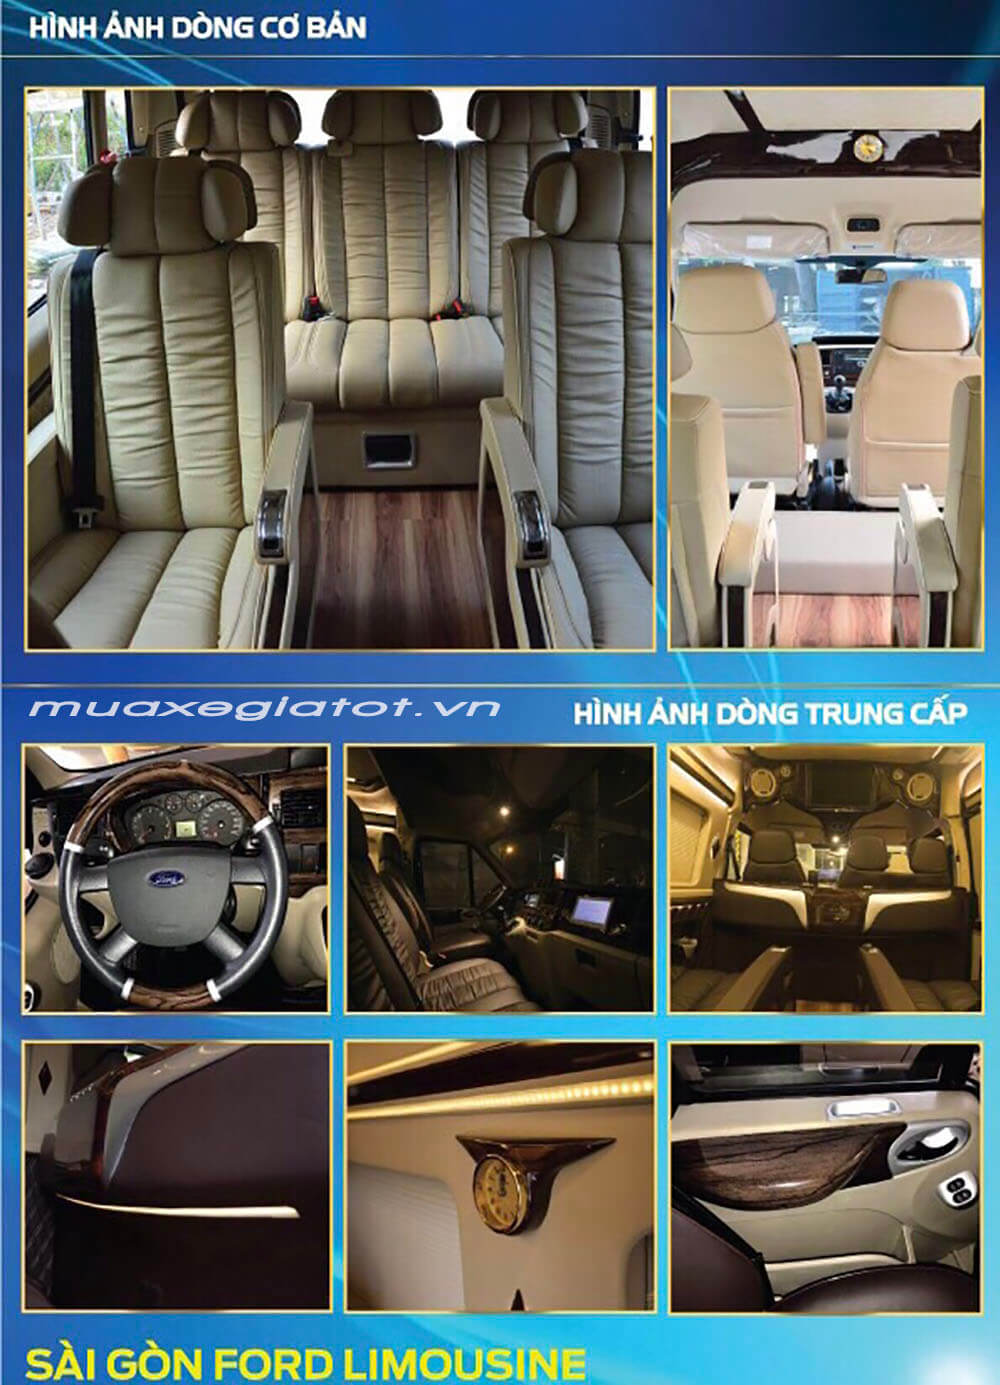 catalogue xe ford transit limousine muaxegiatot vn 3 - [Catalogue] Giới thiệu Ford Transit Limousine 10 chỗ chính hãng